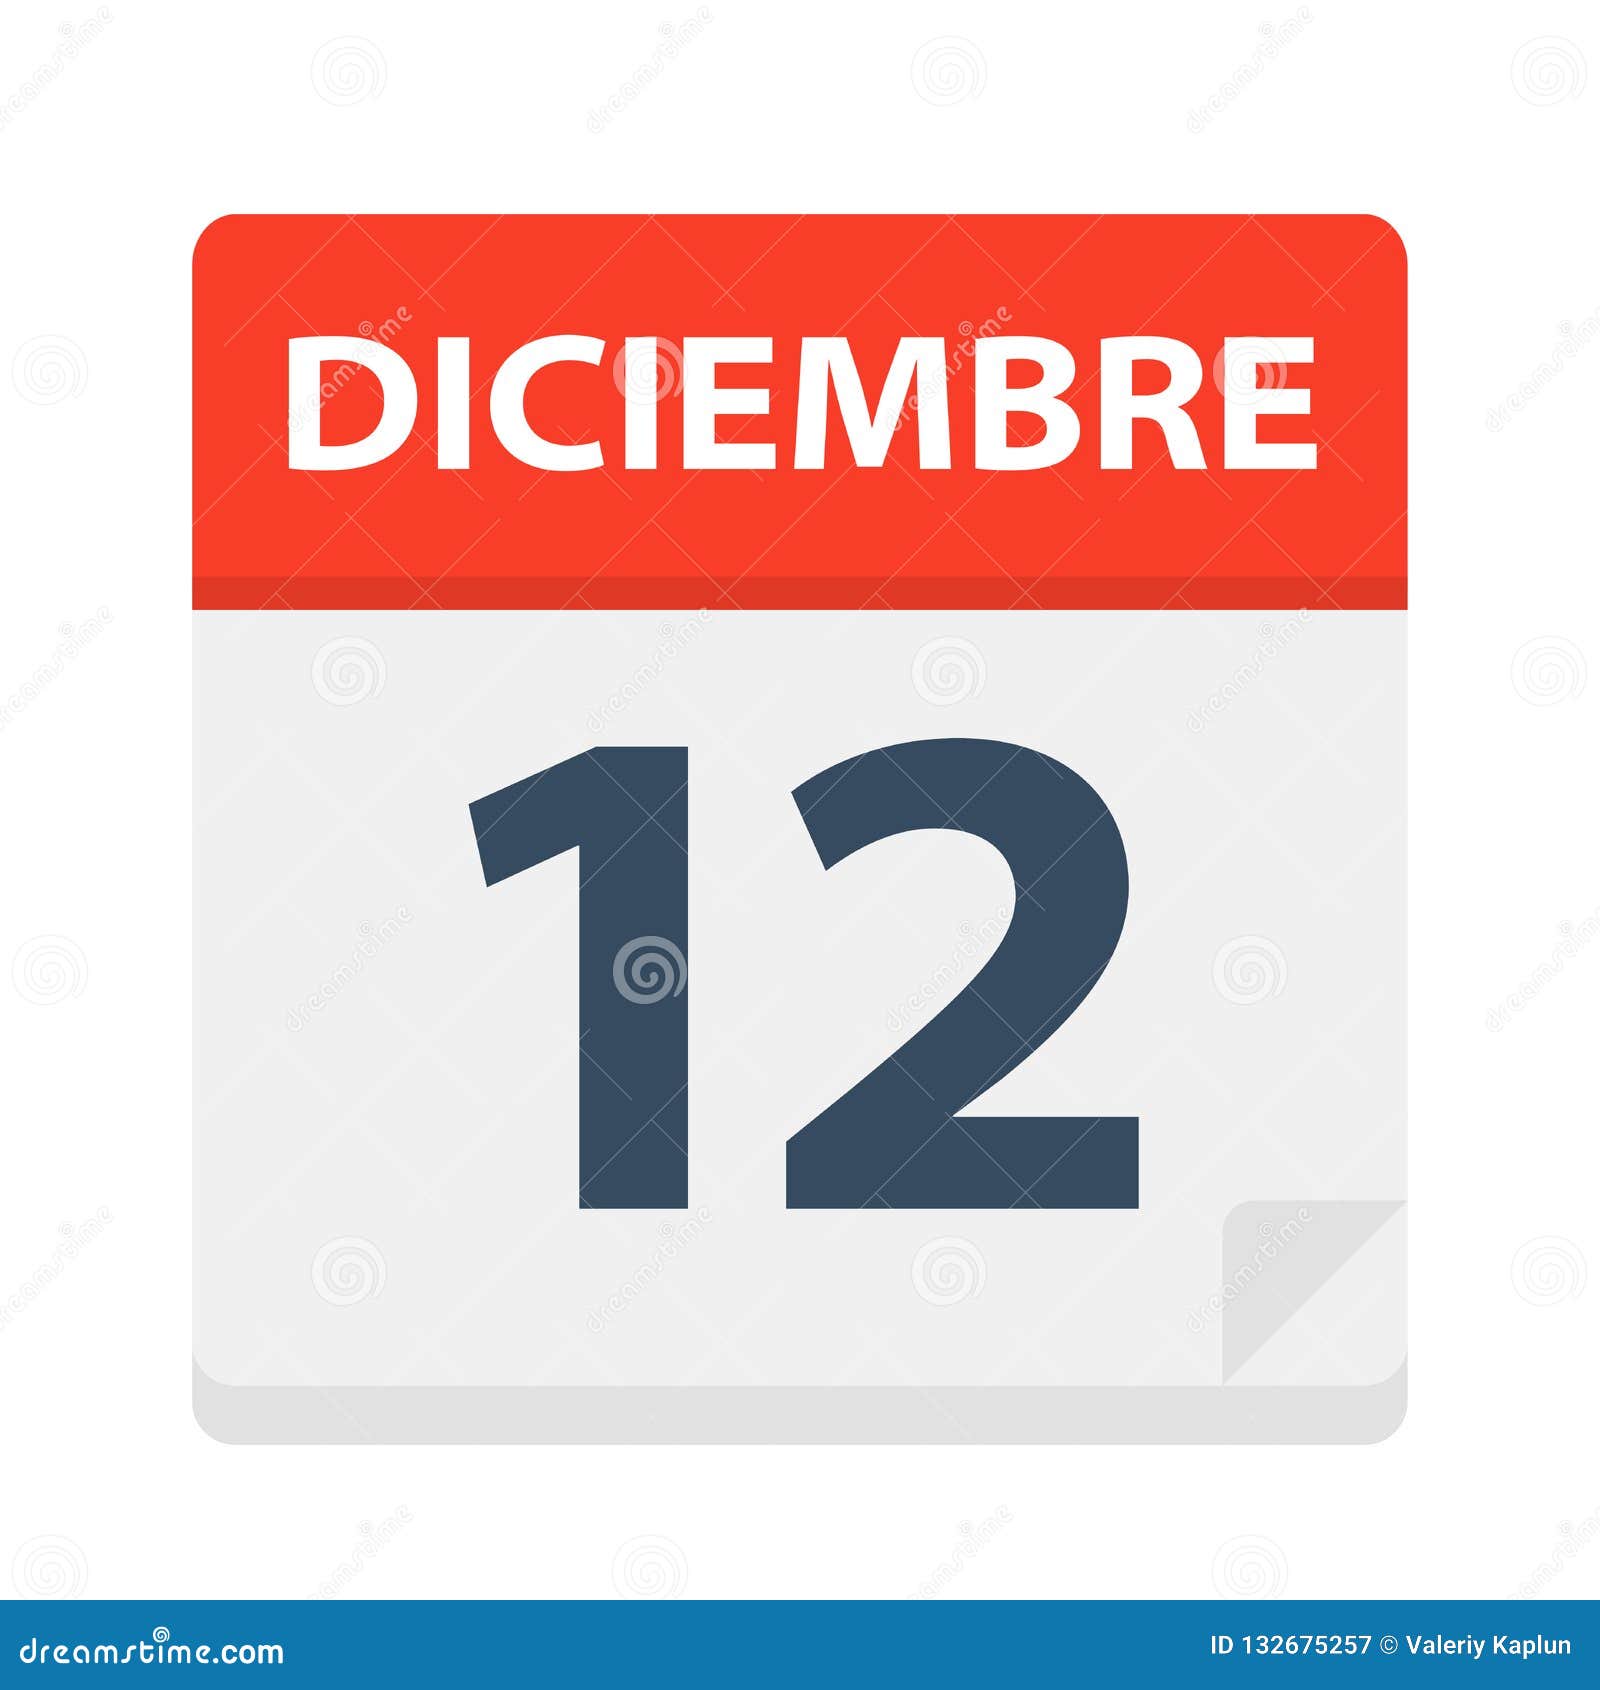 diciembre 12 - calendar icon - december 12.   of spanish calendar leaf